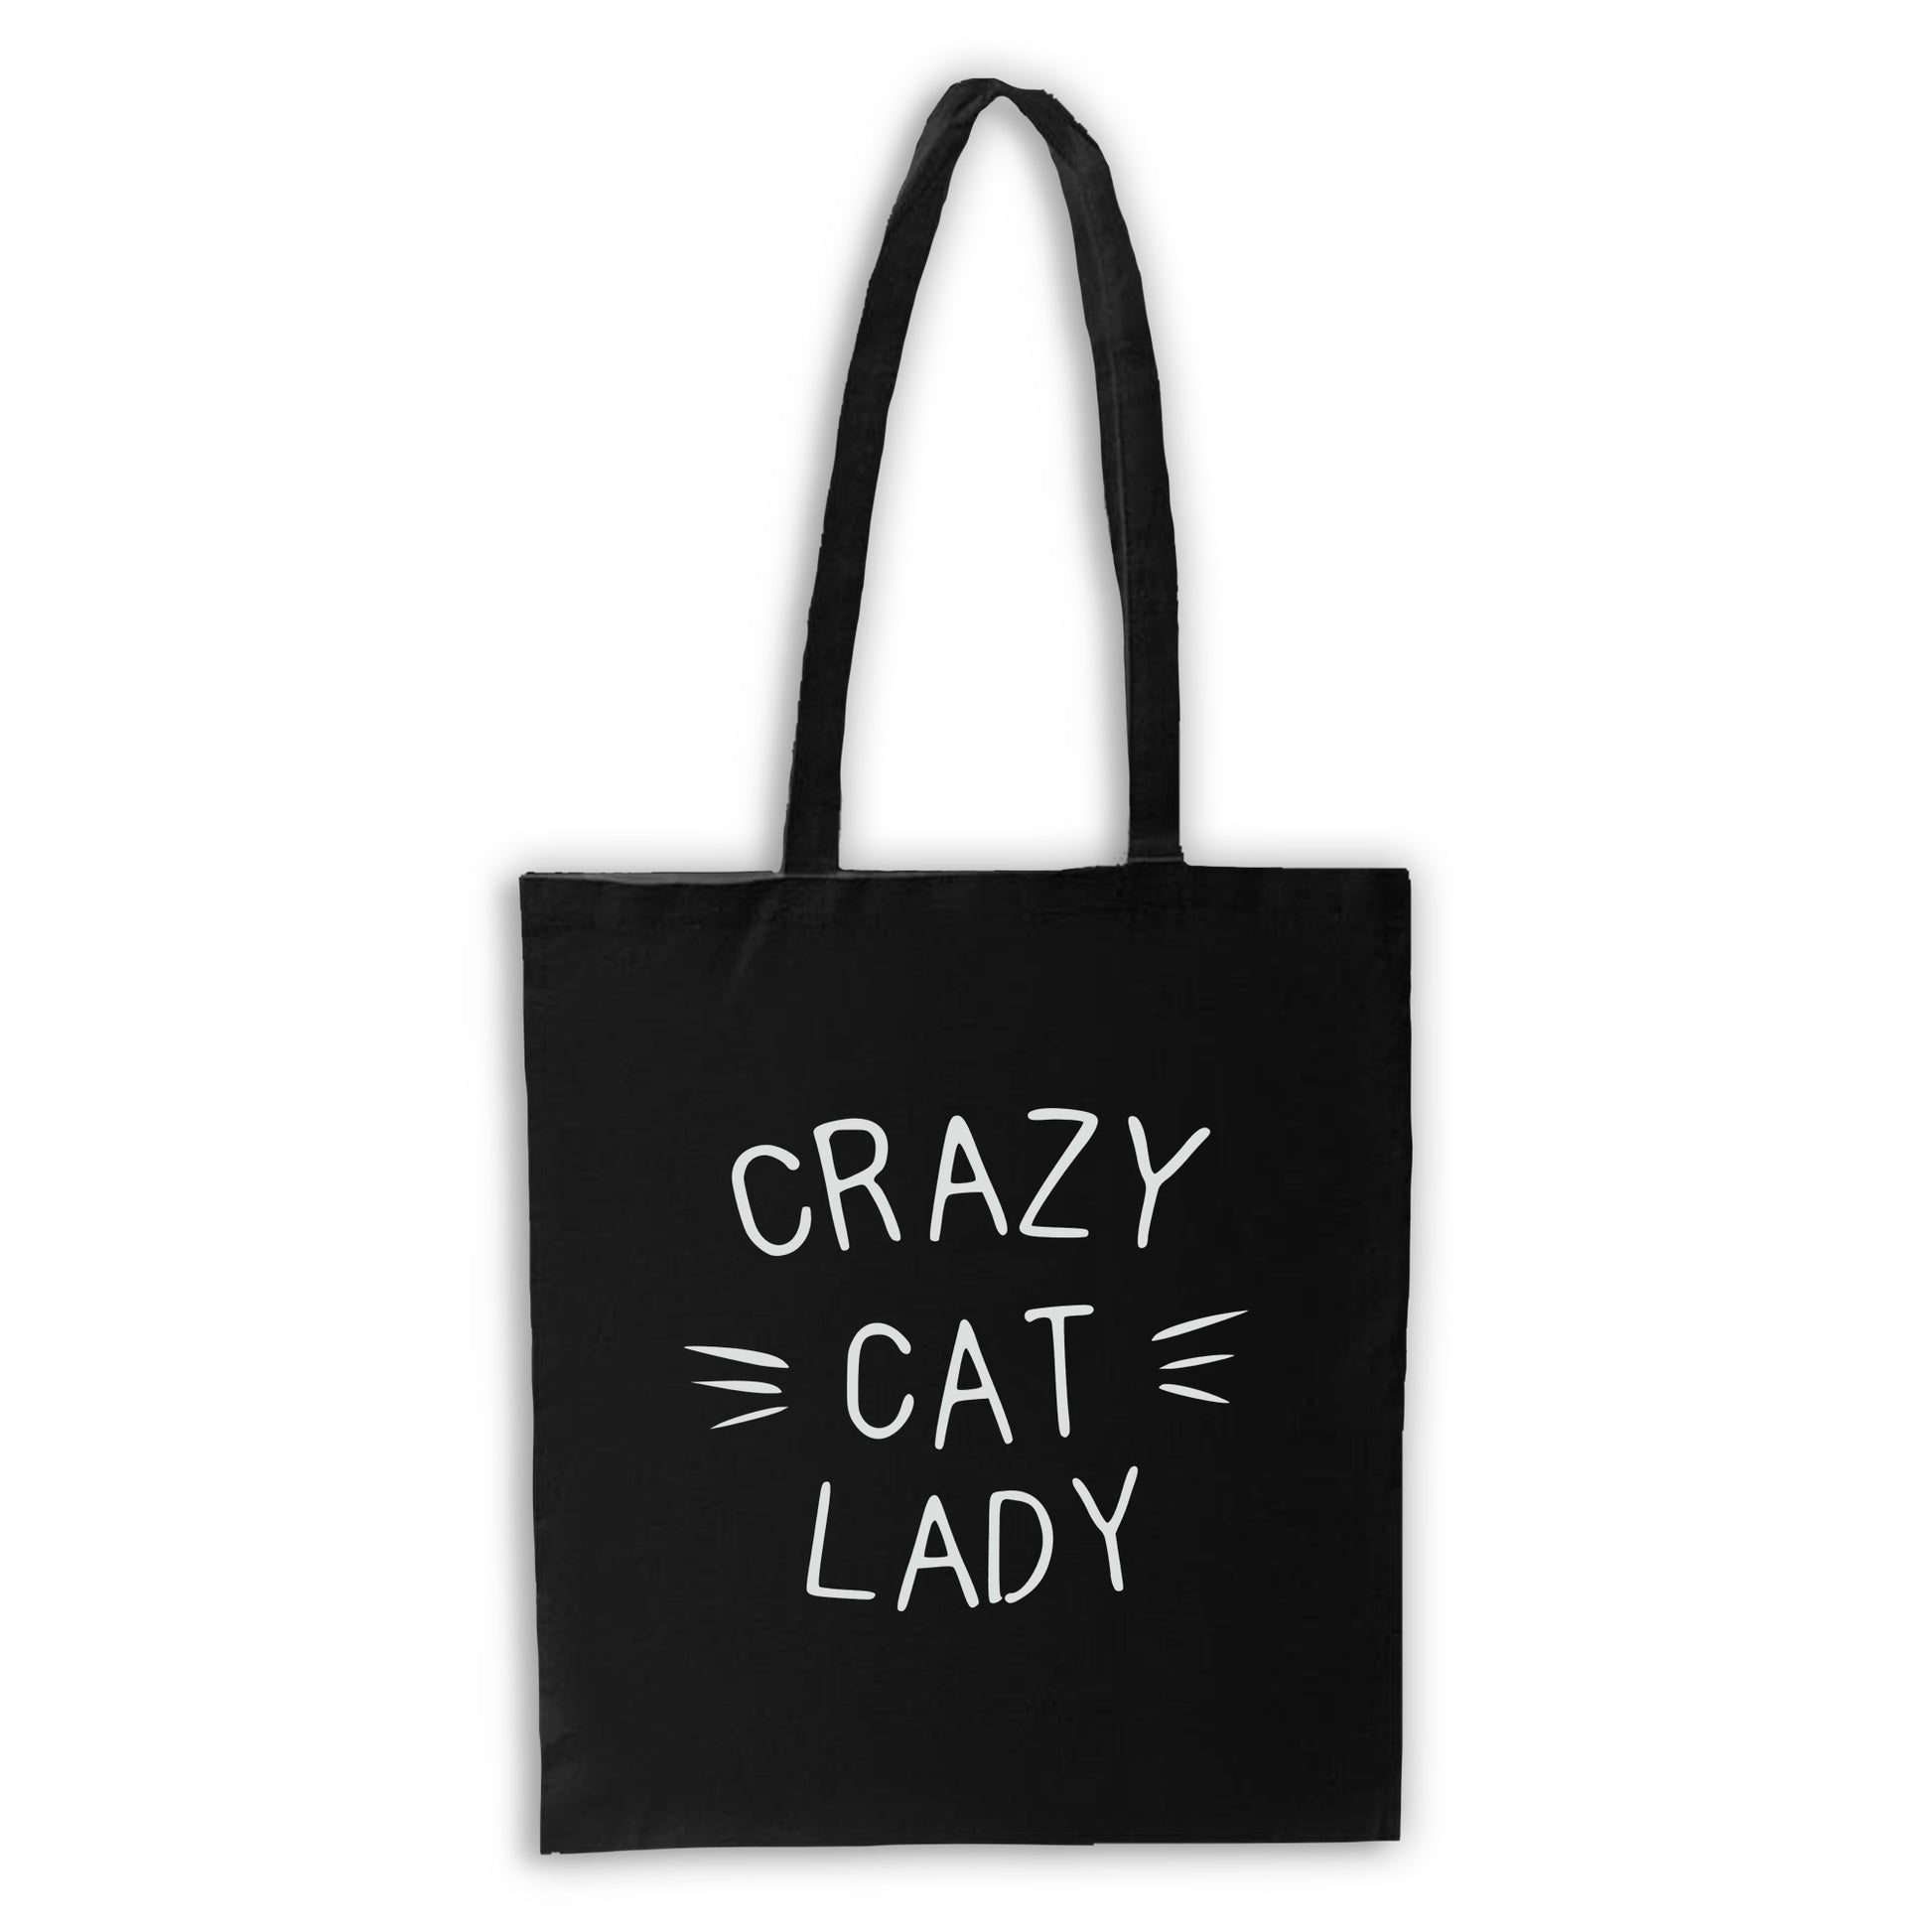 Crazy Cat Lady - Black Tote Bag